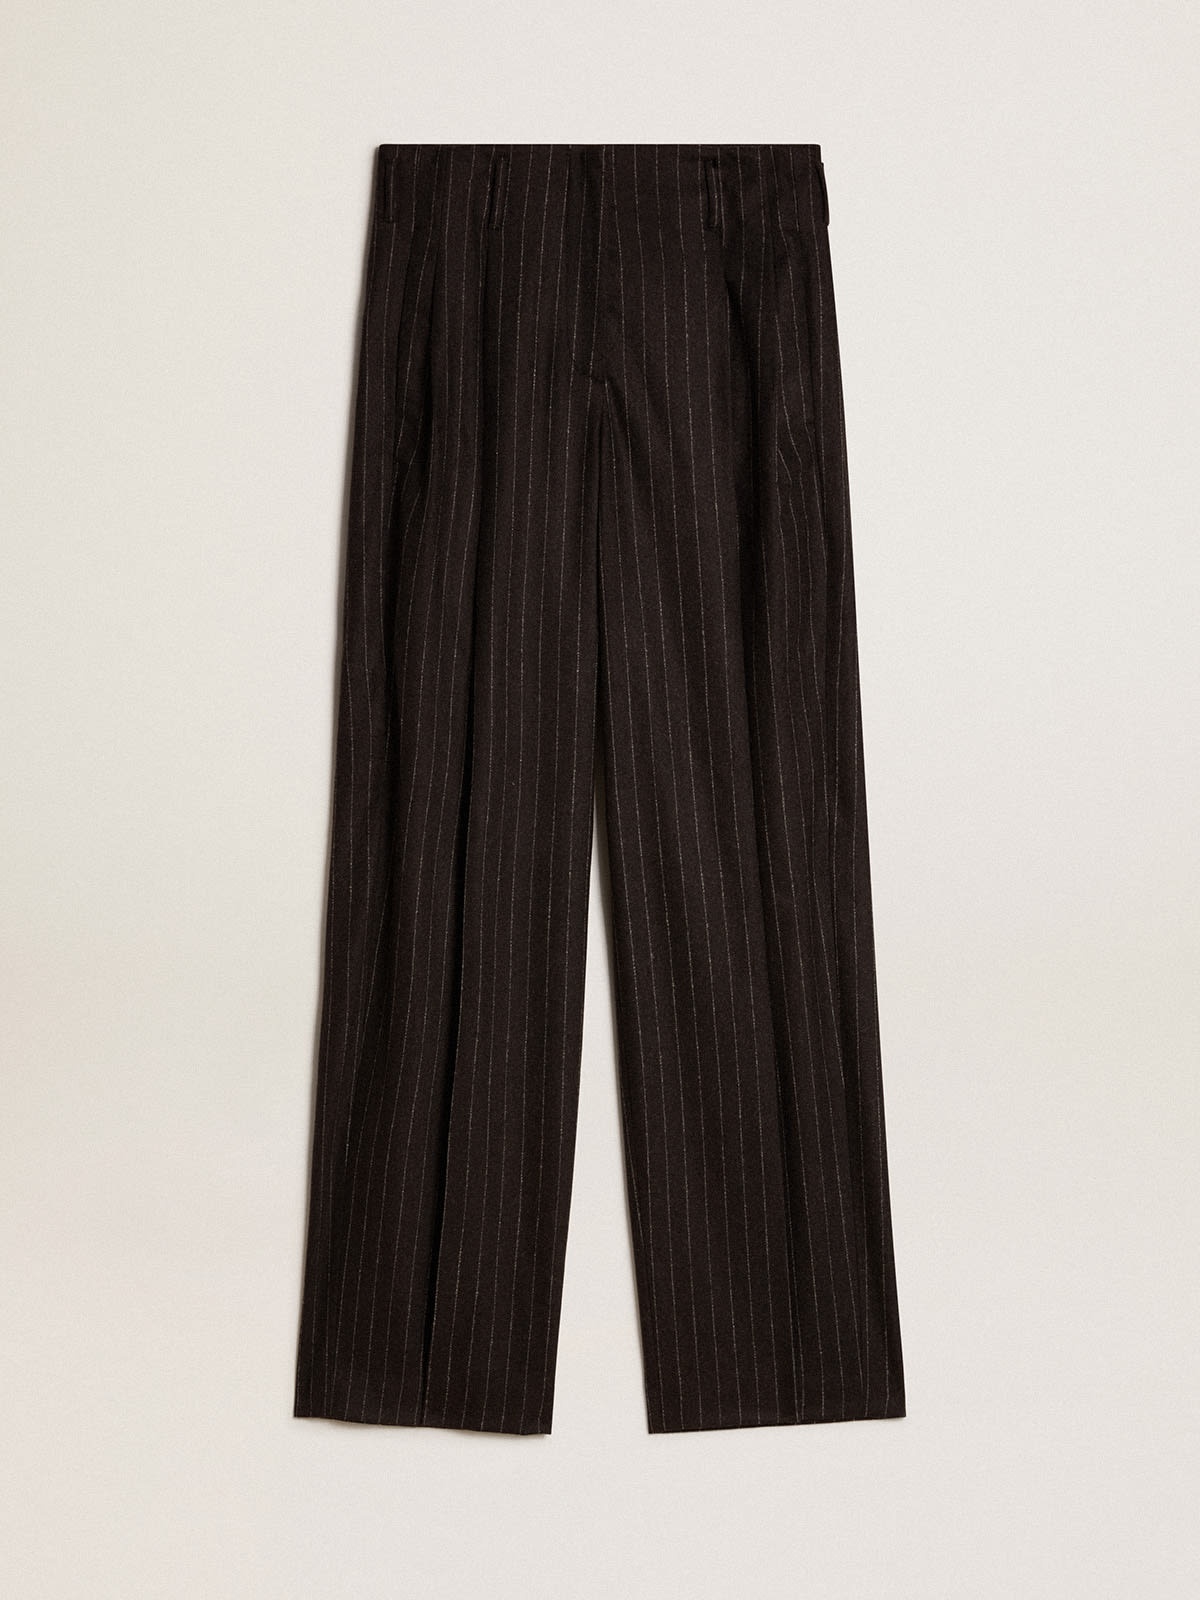 Women’s pants in dark gray wool - 1